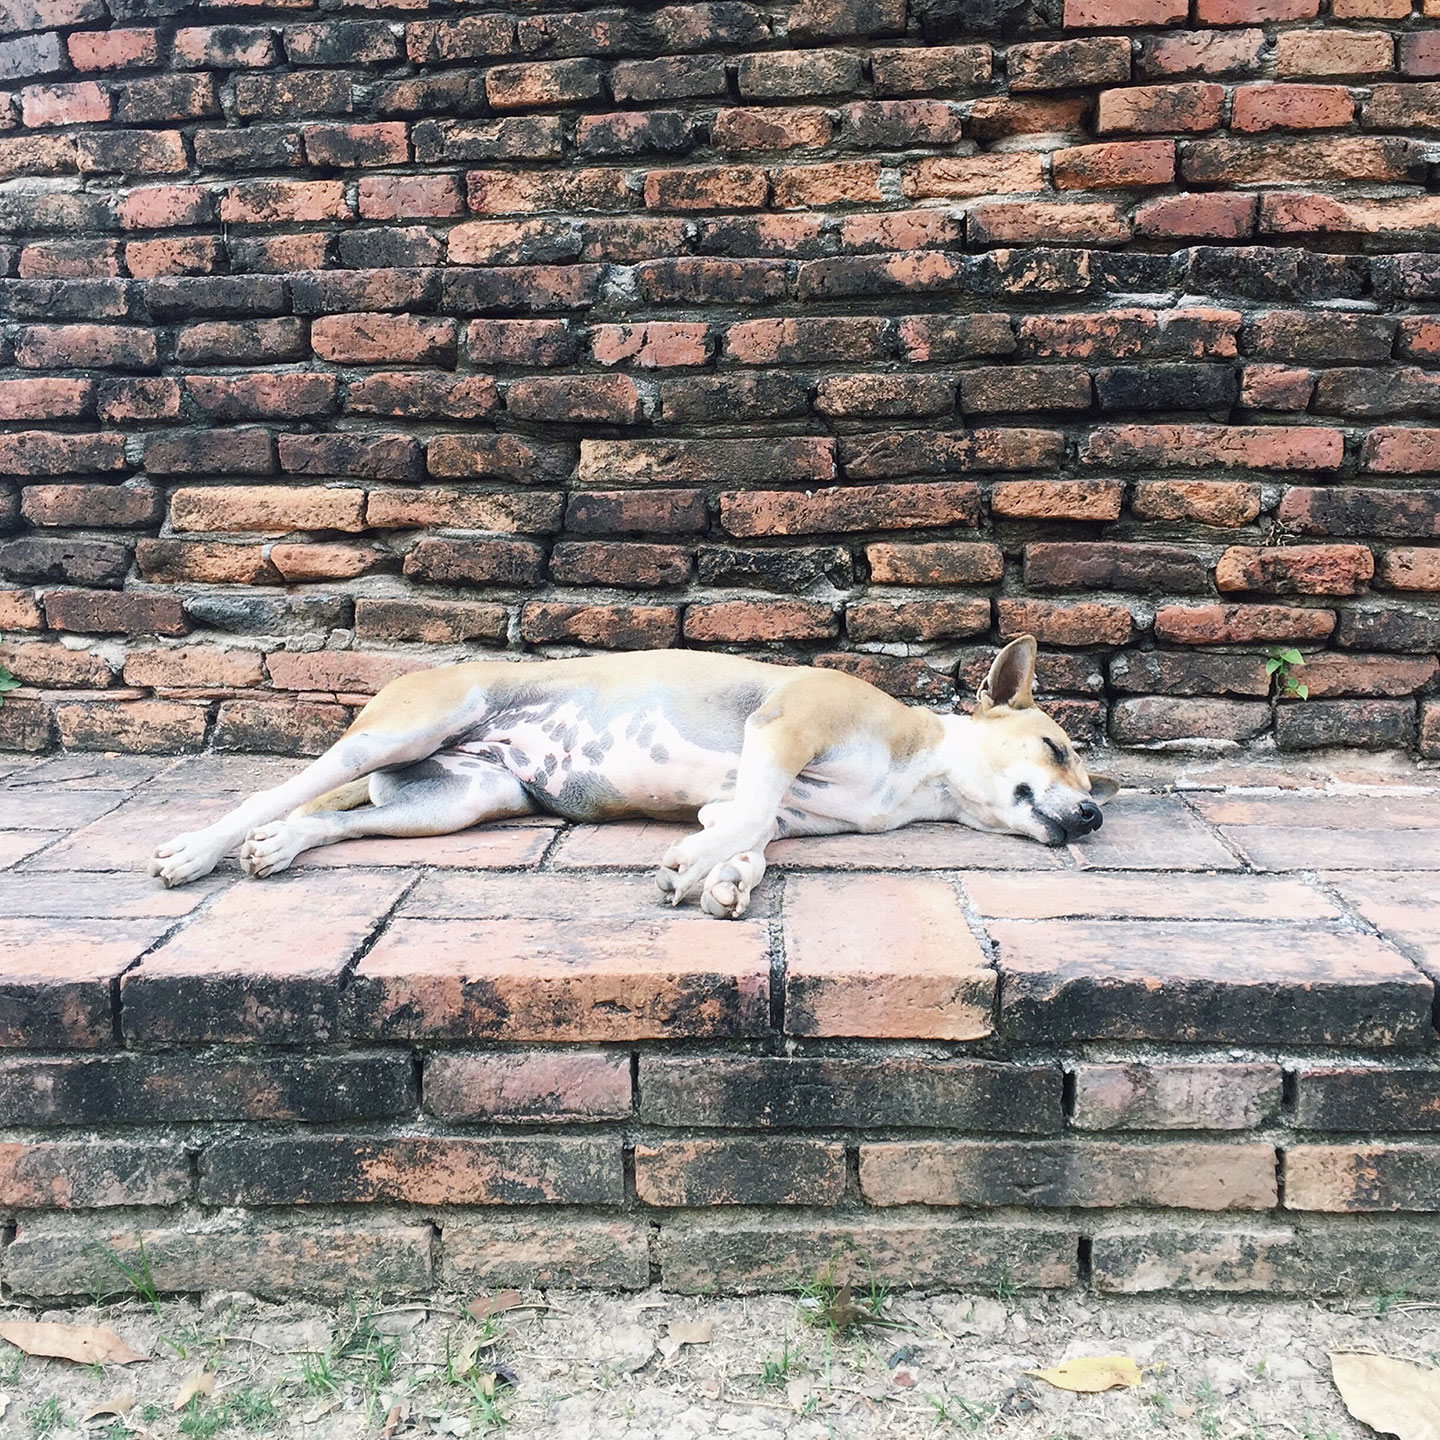  Stray dog taking a nap in Ayutthaya 